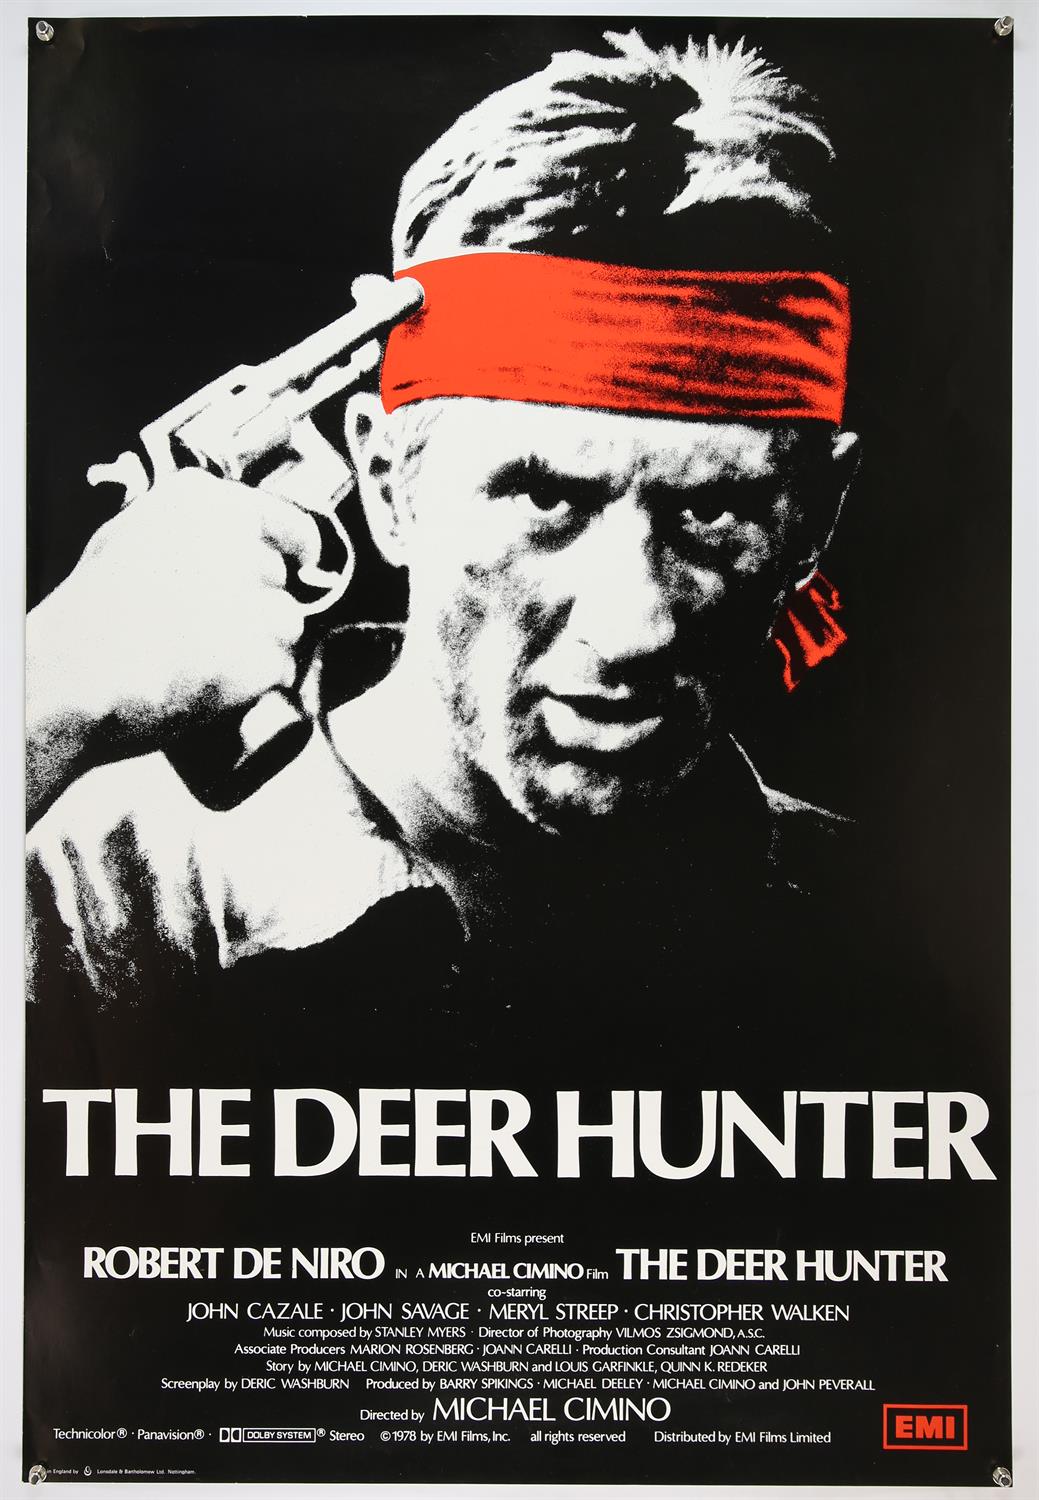 The Deer Hunter (1978) UK One Sheet and Double Crown film posters, starring Robert De Niro, rolled,